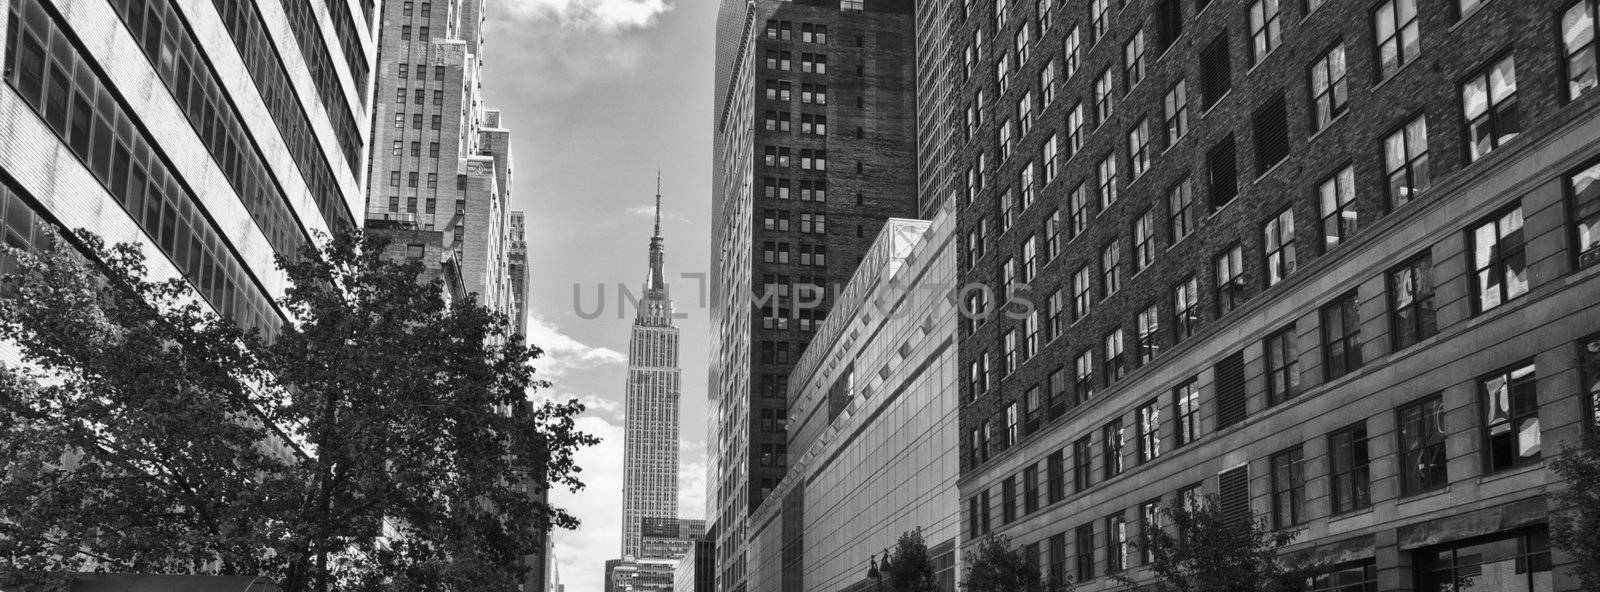 Skyscrapers of Manhattan, New York City